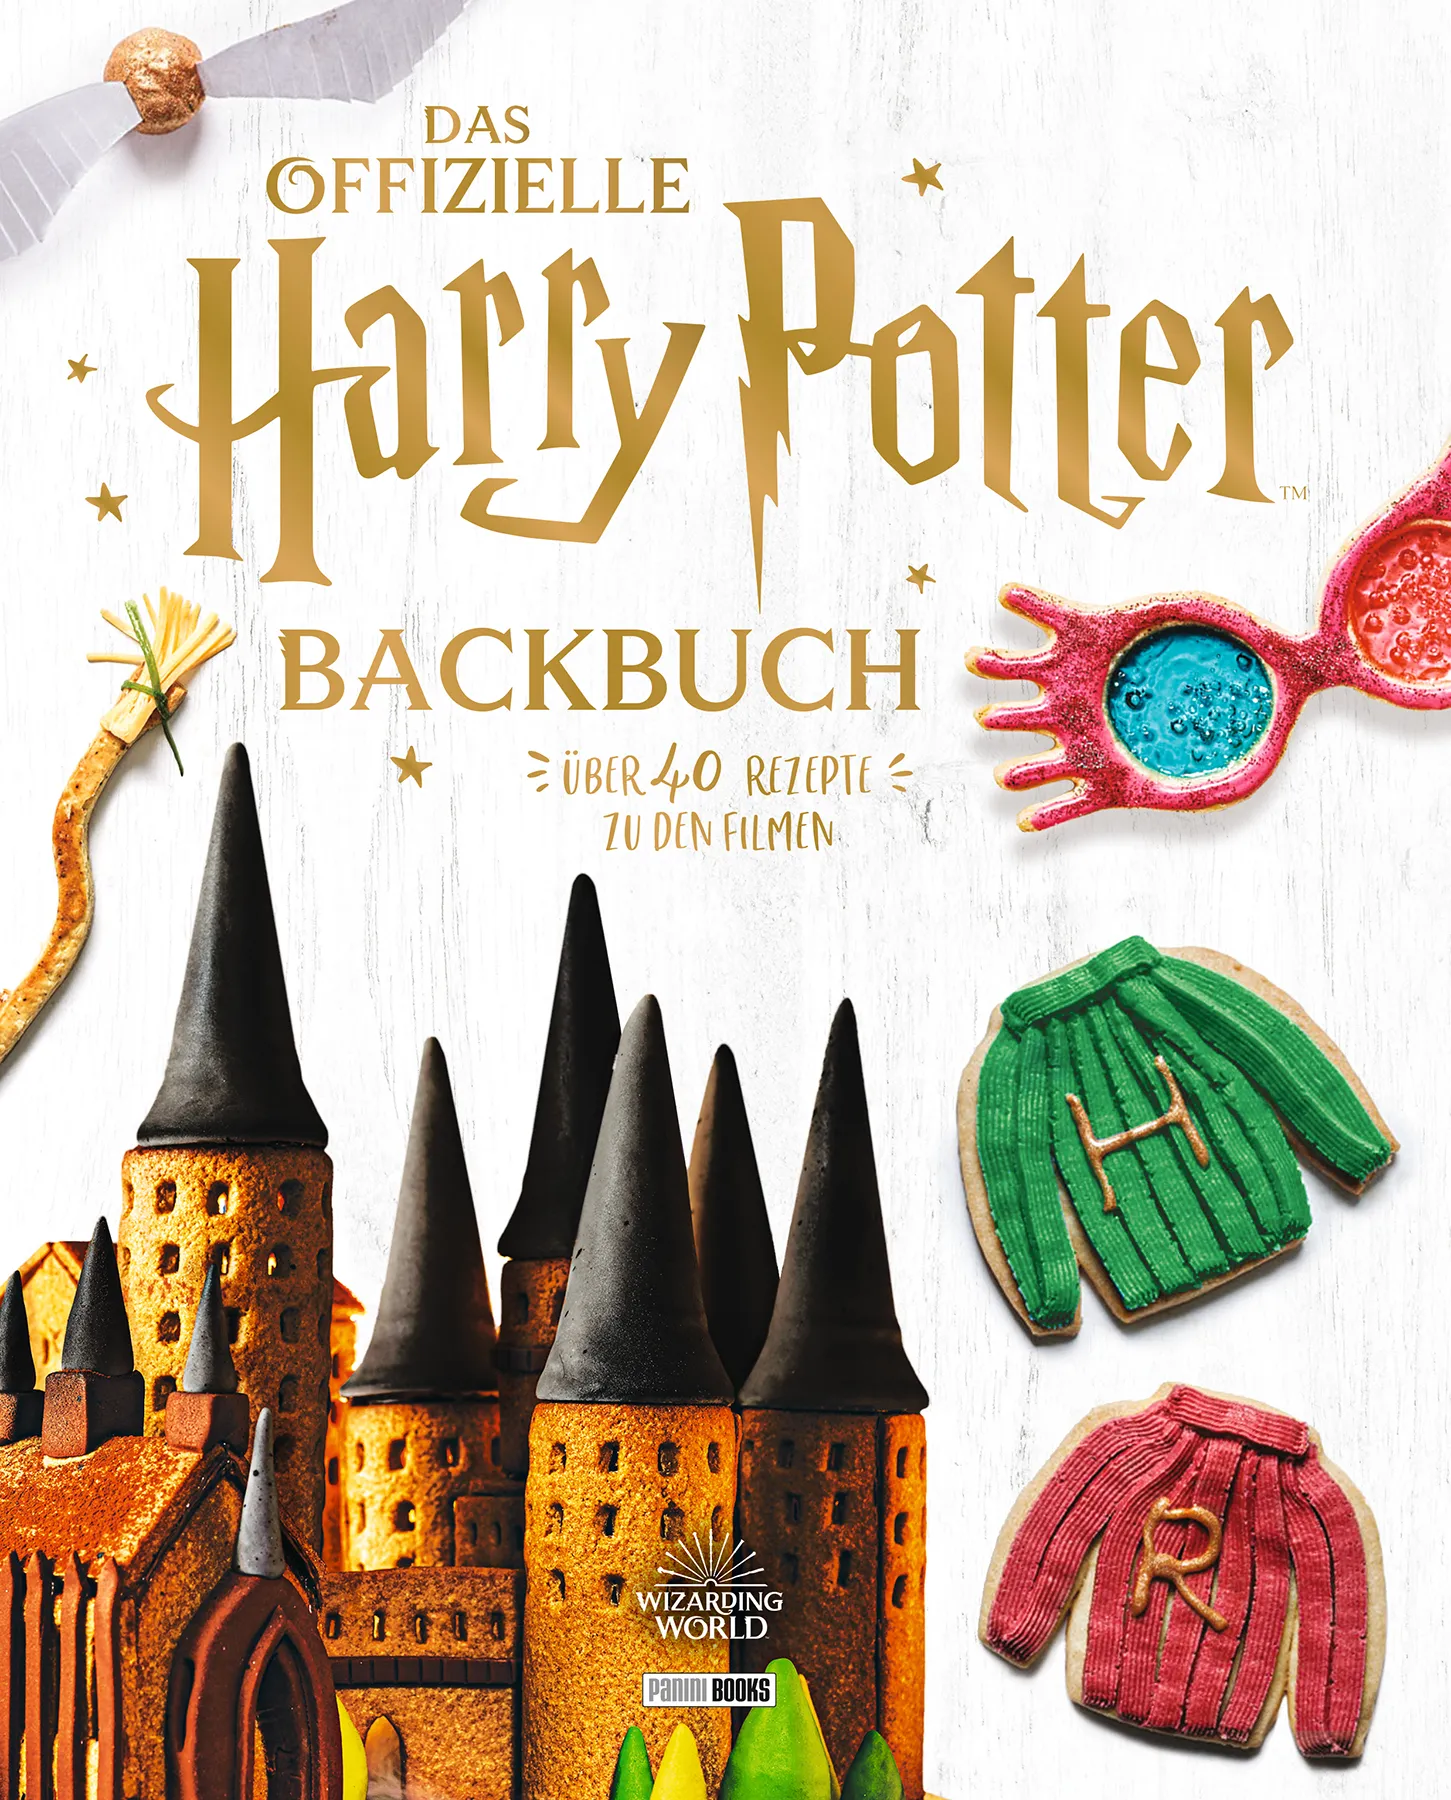 Harry Potter - Das offizielle Harry Potter Backbuch